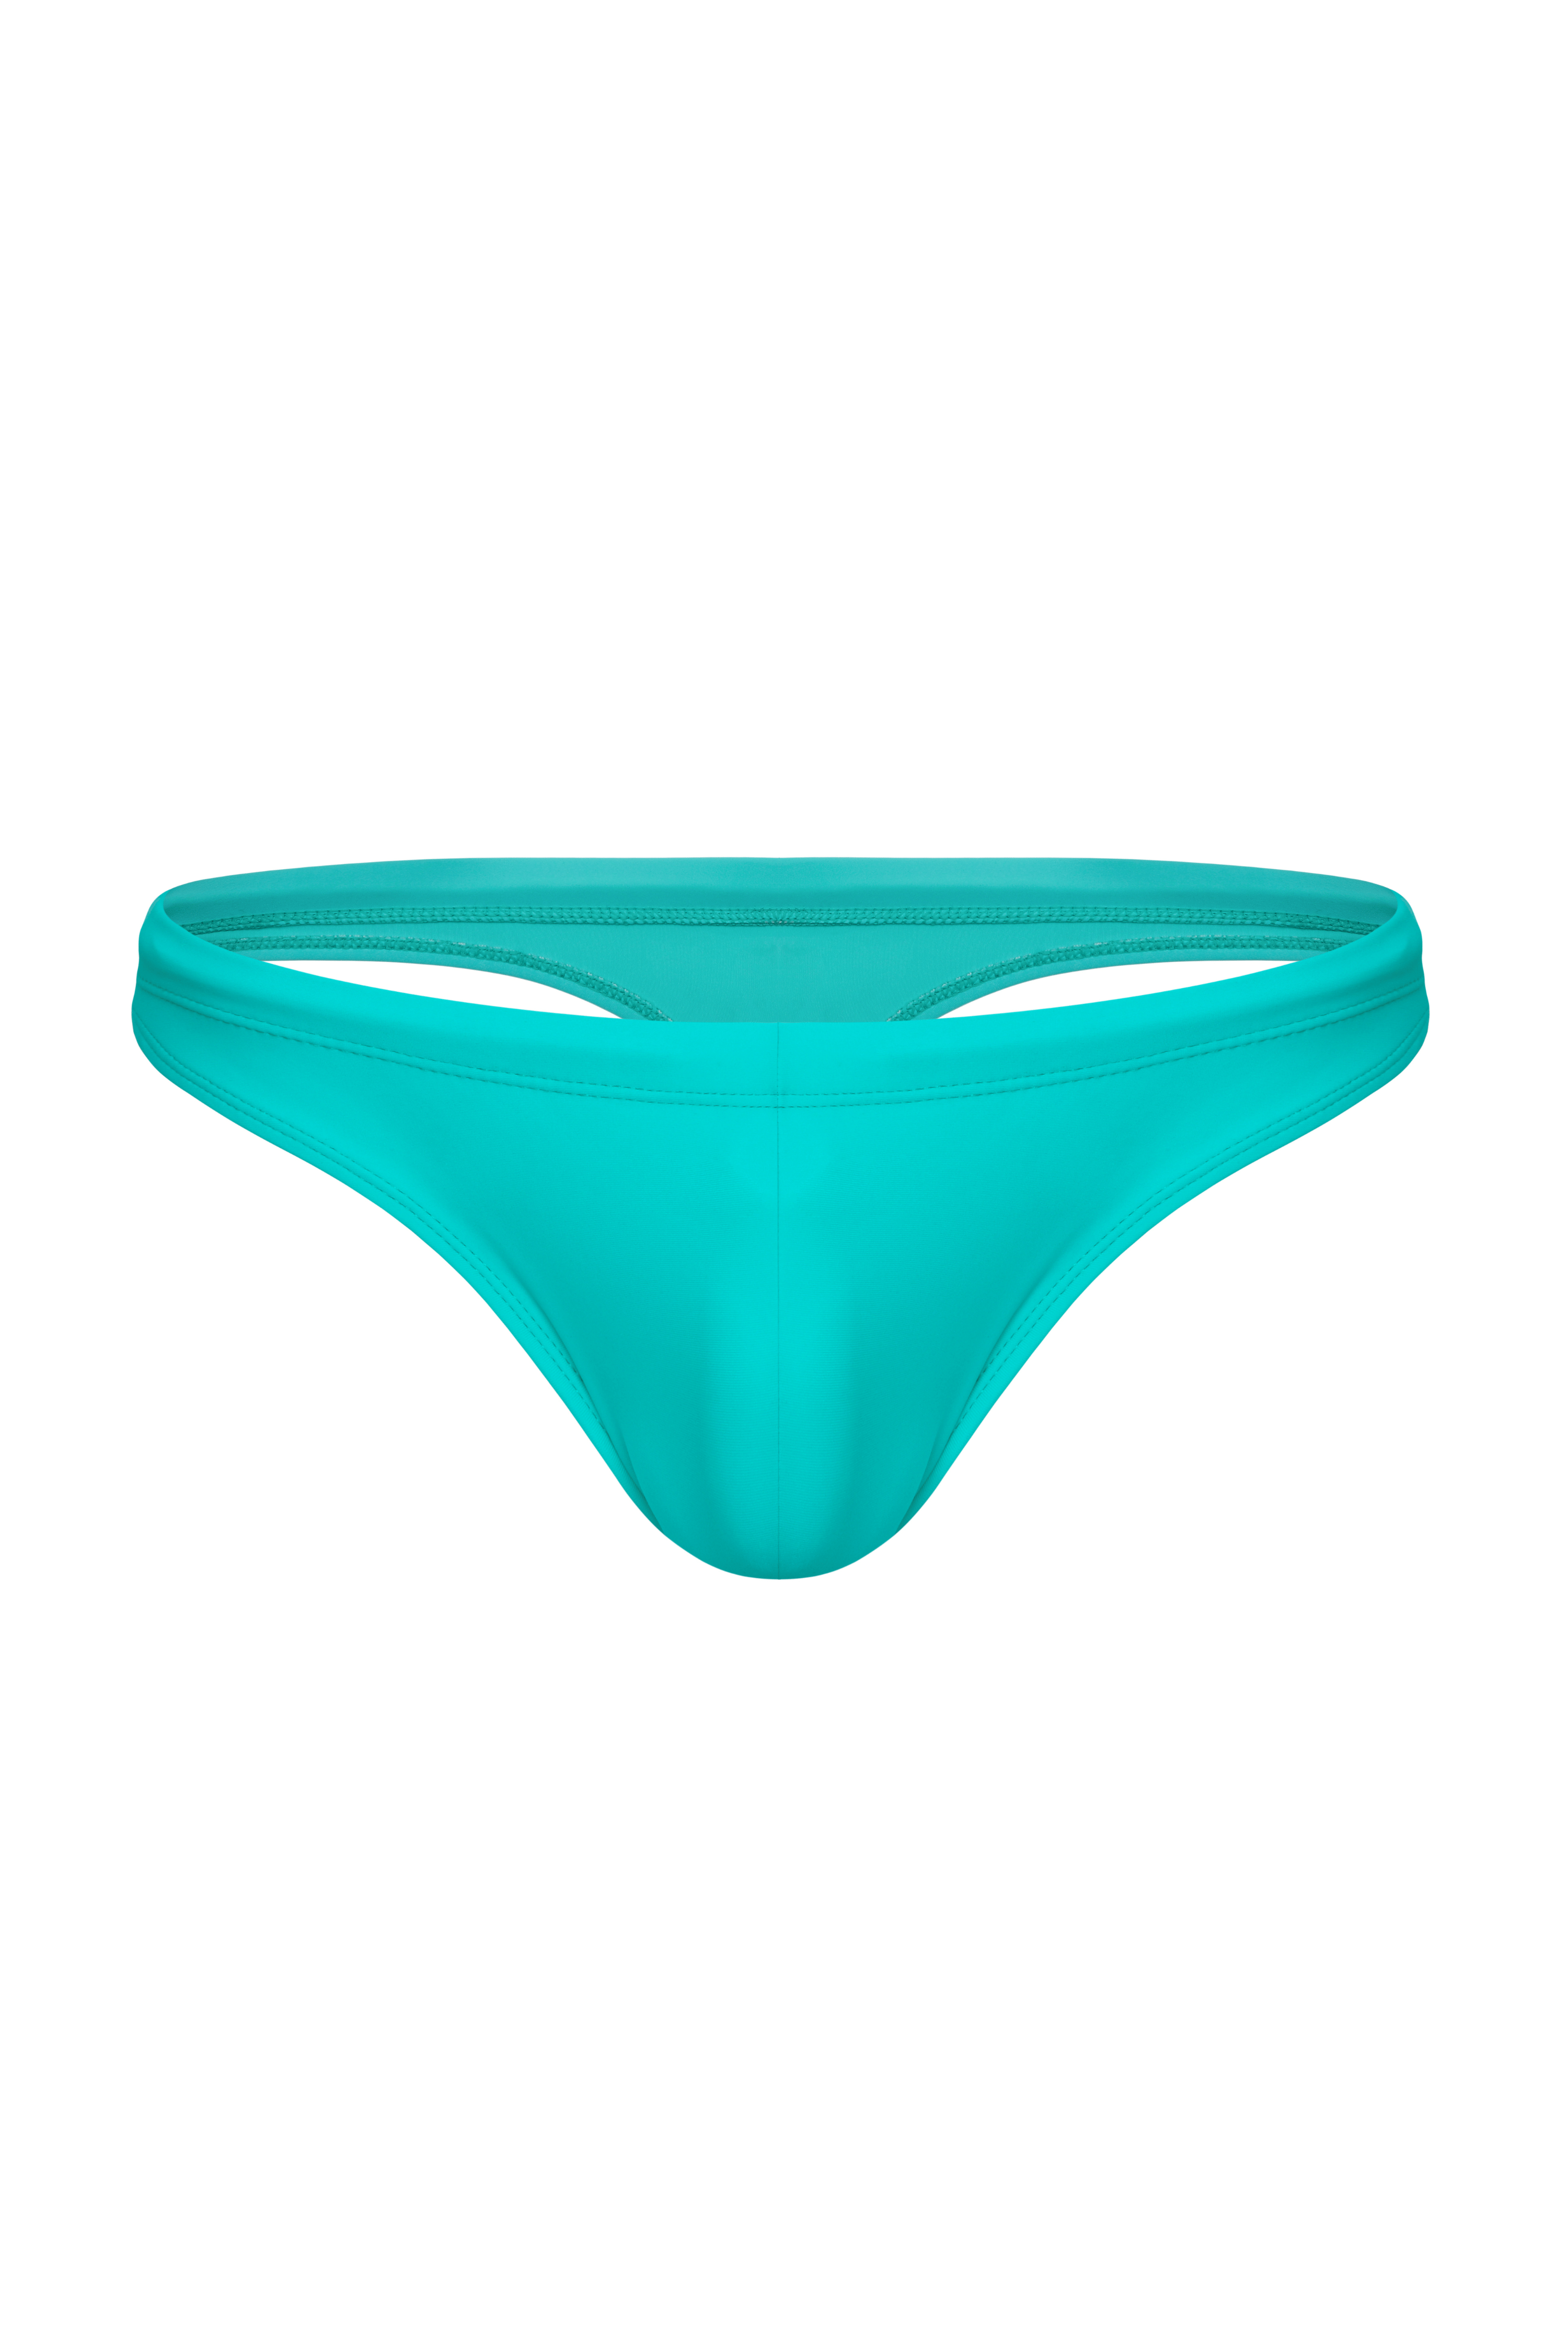 Classic Swim Thong | Turquoise - Coyote Jocks 